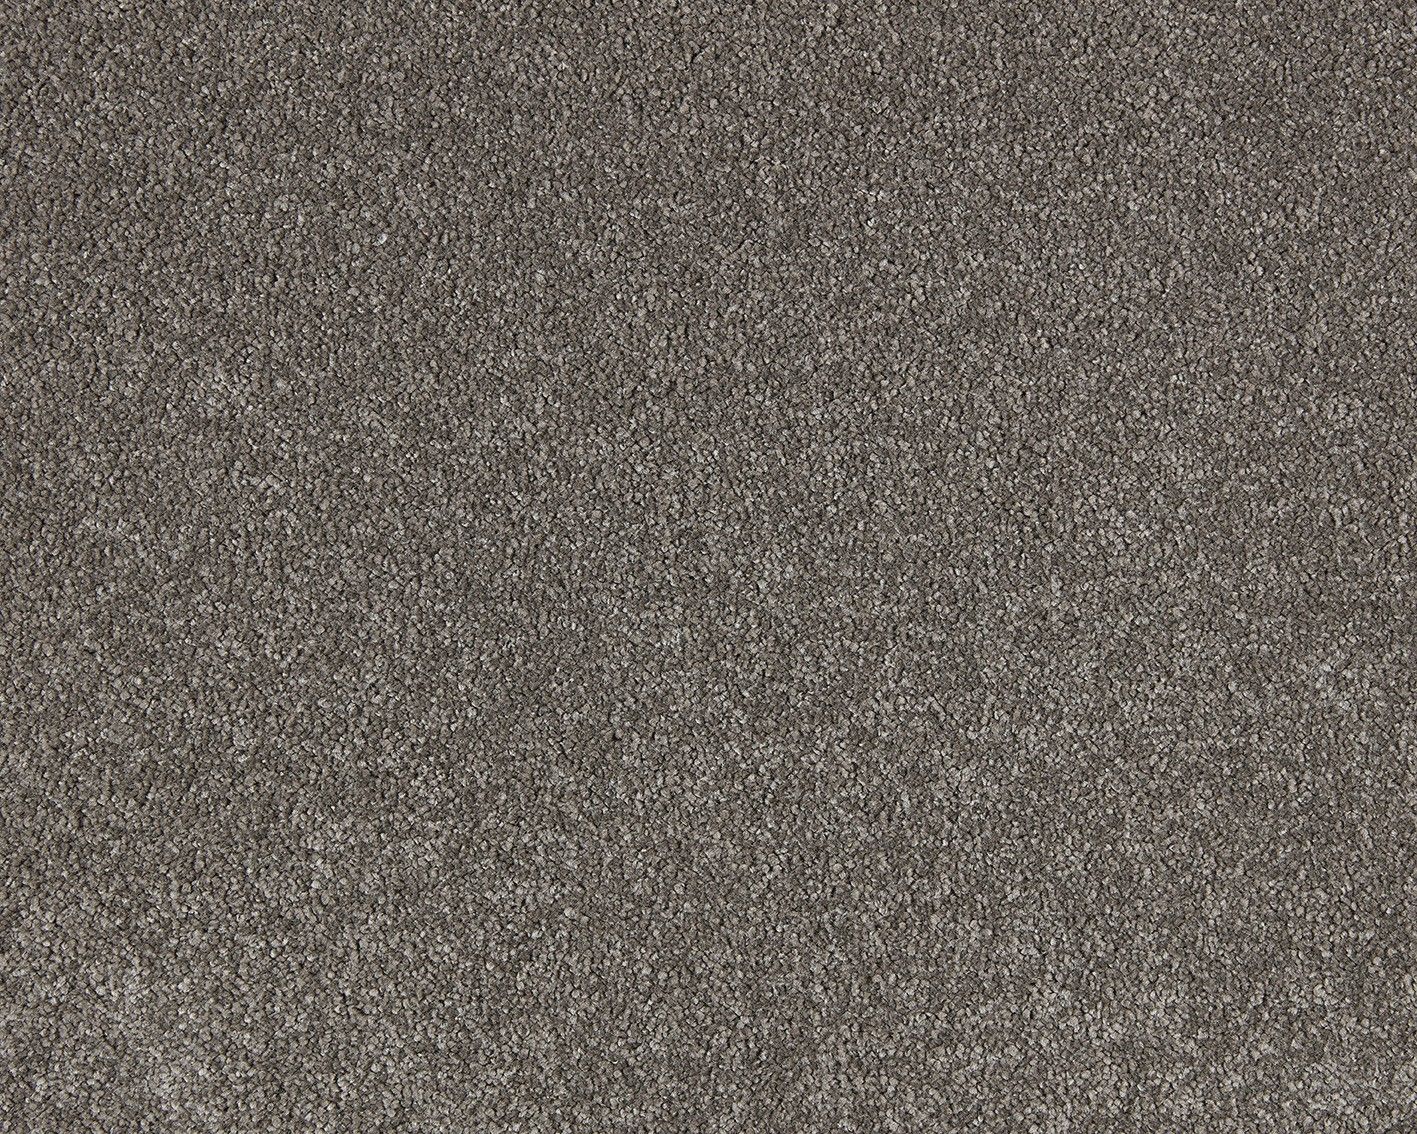 Soft distinction carpet flooring | Budget Flooring, Inc.